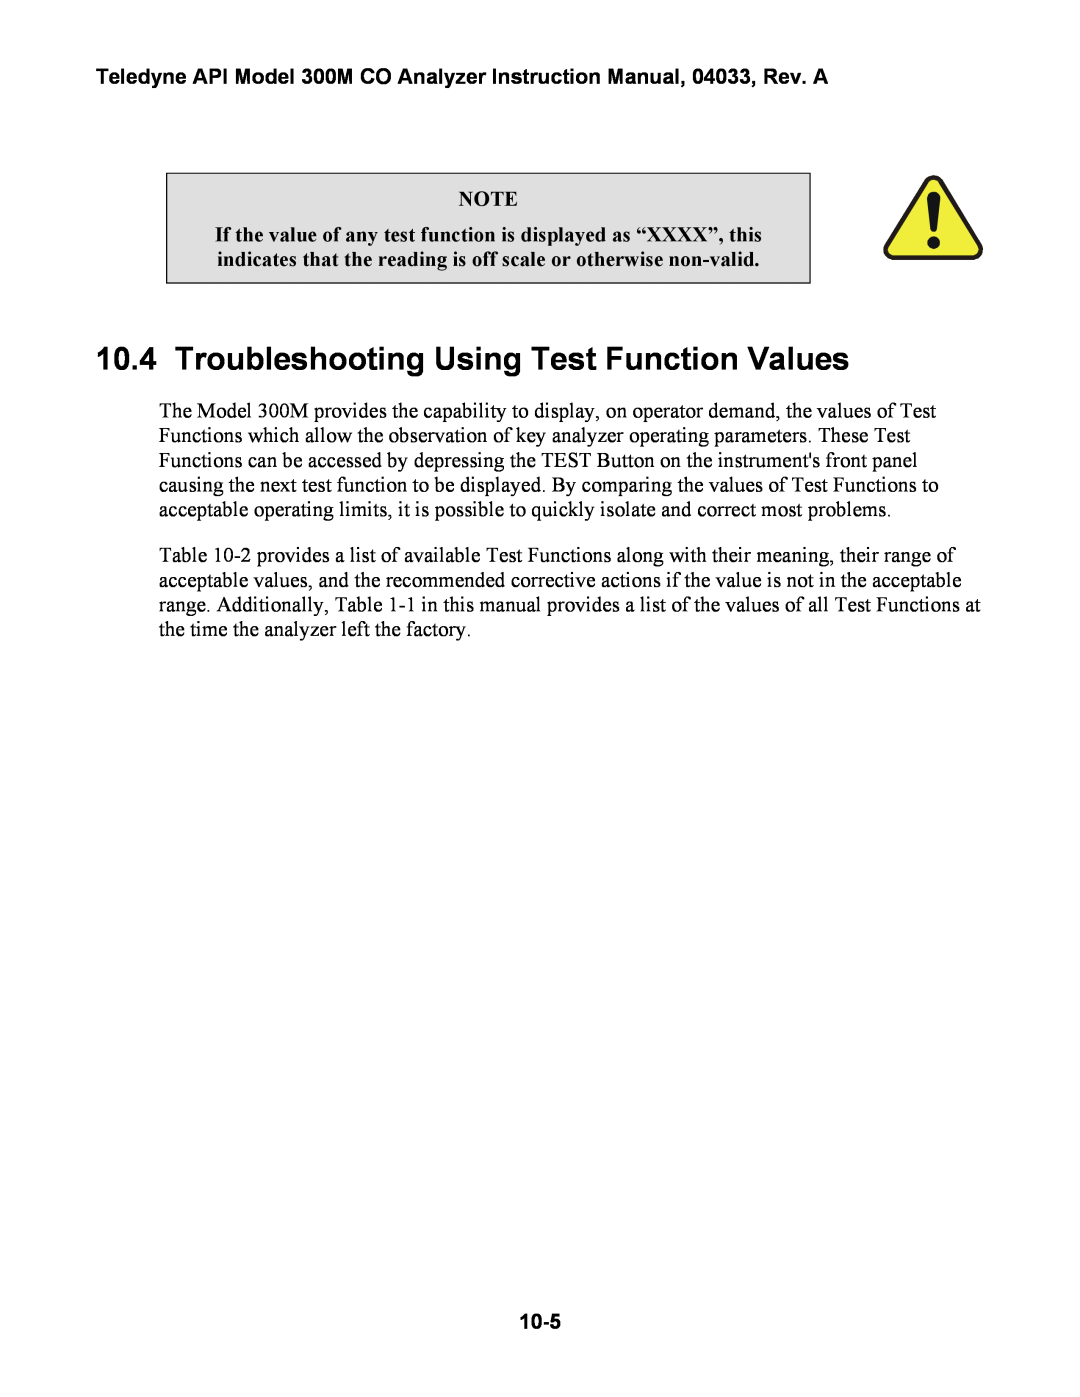 Teledyne 300M instruction manual Troubleshooting Using Test Function Values, 10-5 